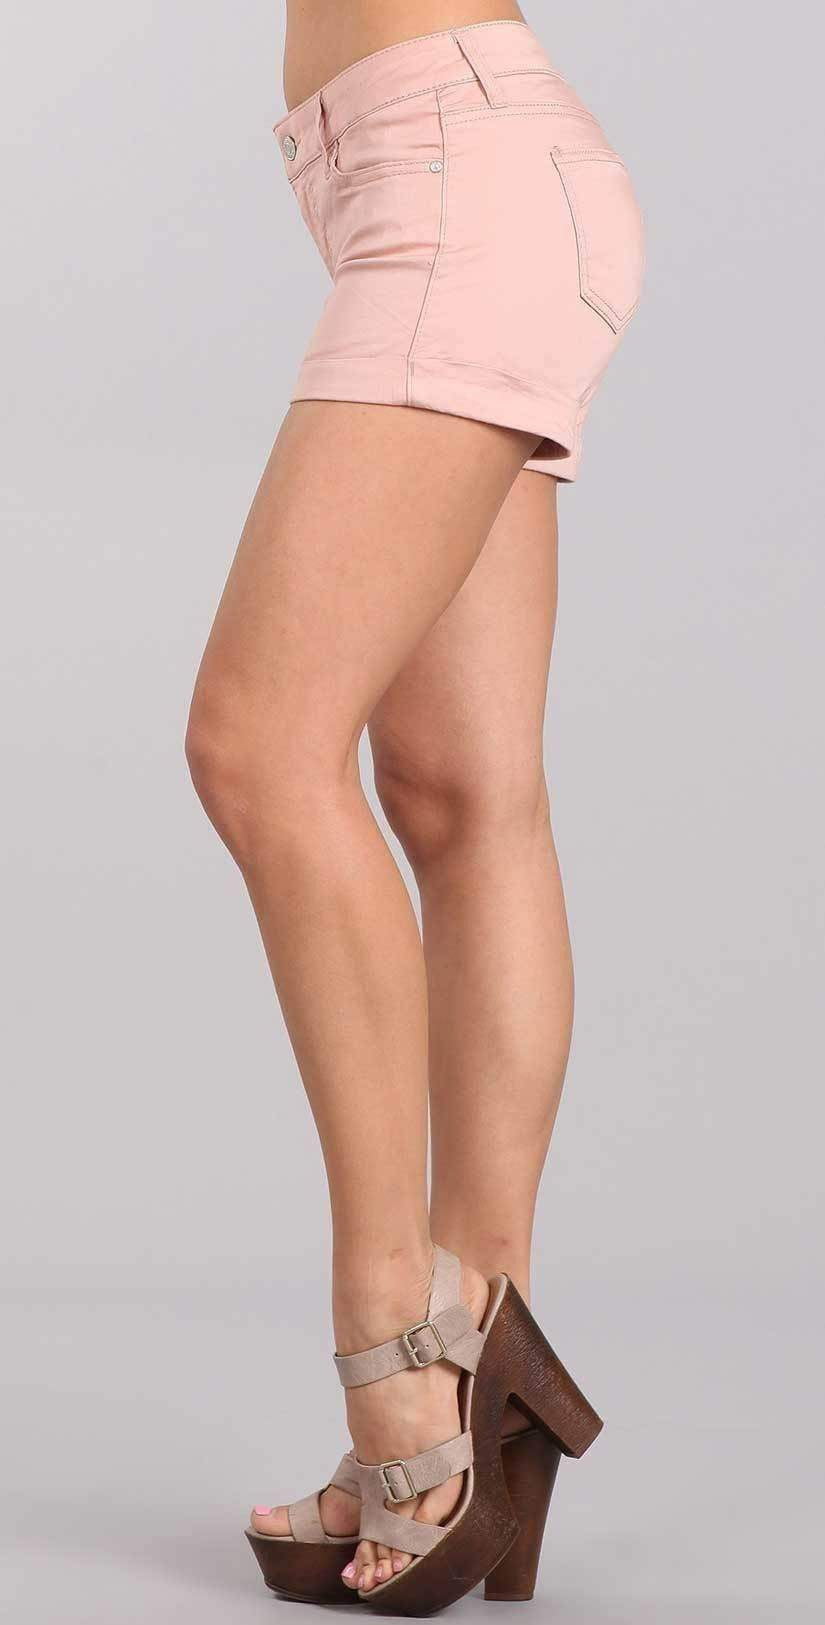 Celebrity Pink Jean 3" Mid Rise Shorts in Misty Rose CJ3050Z35: